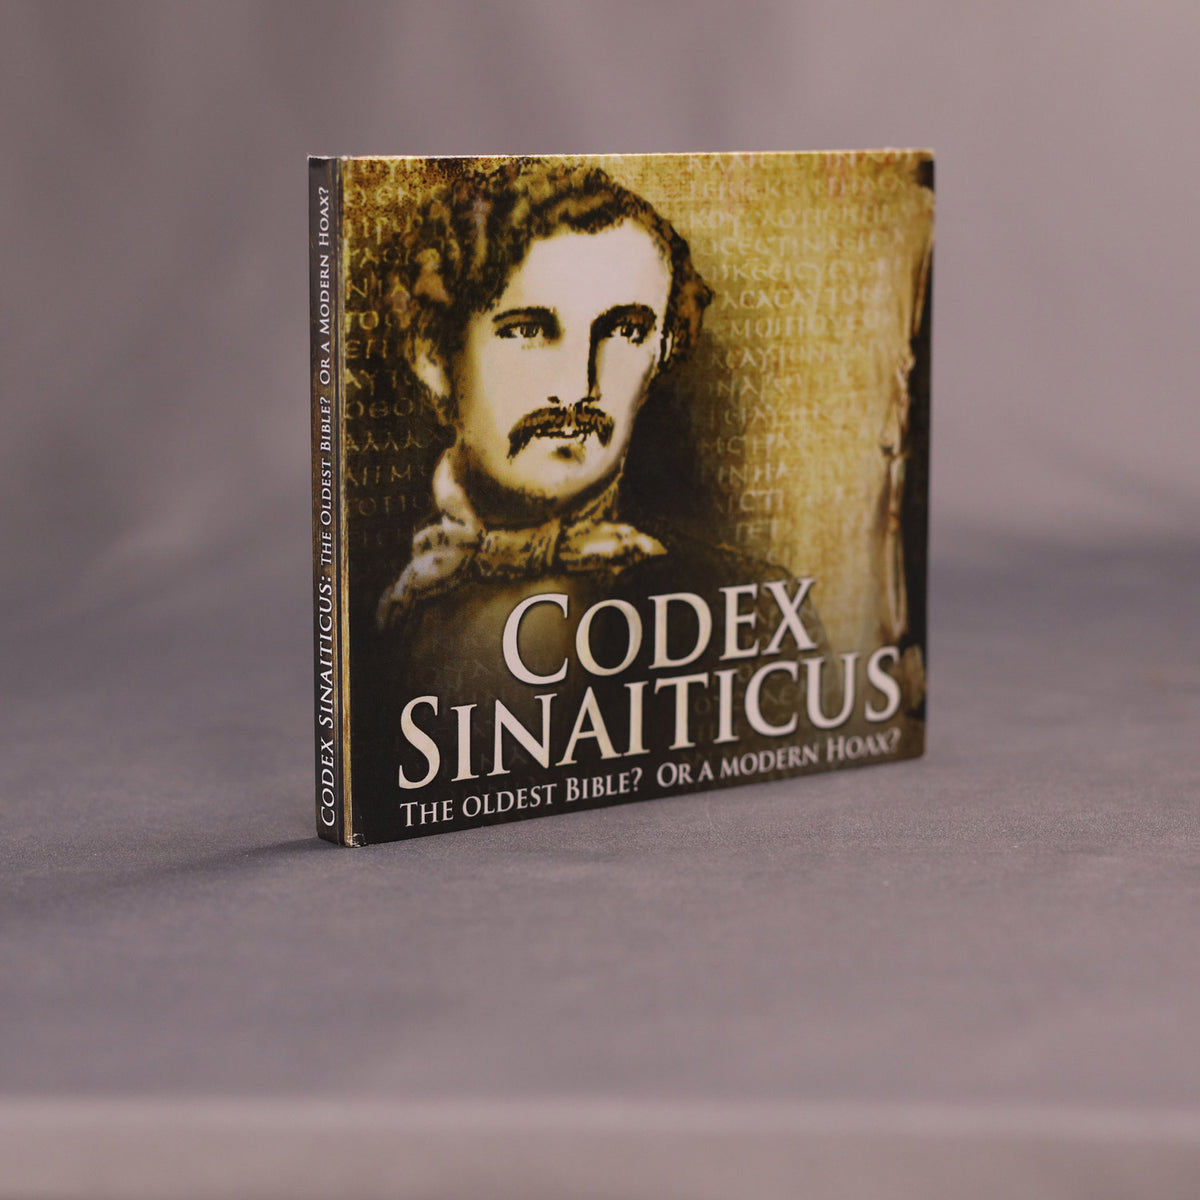 Codex Sinaiticus - The Oldest Bible? Or a Modern Hoax? (2-disc audio CD)